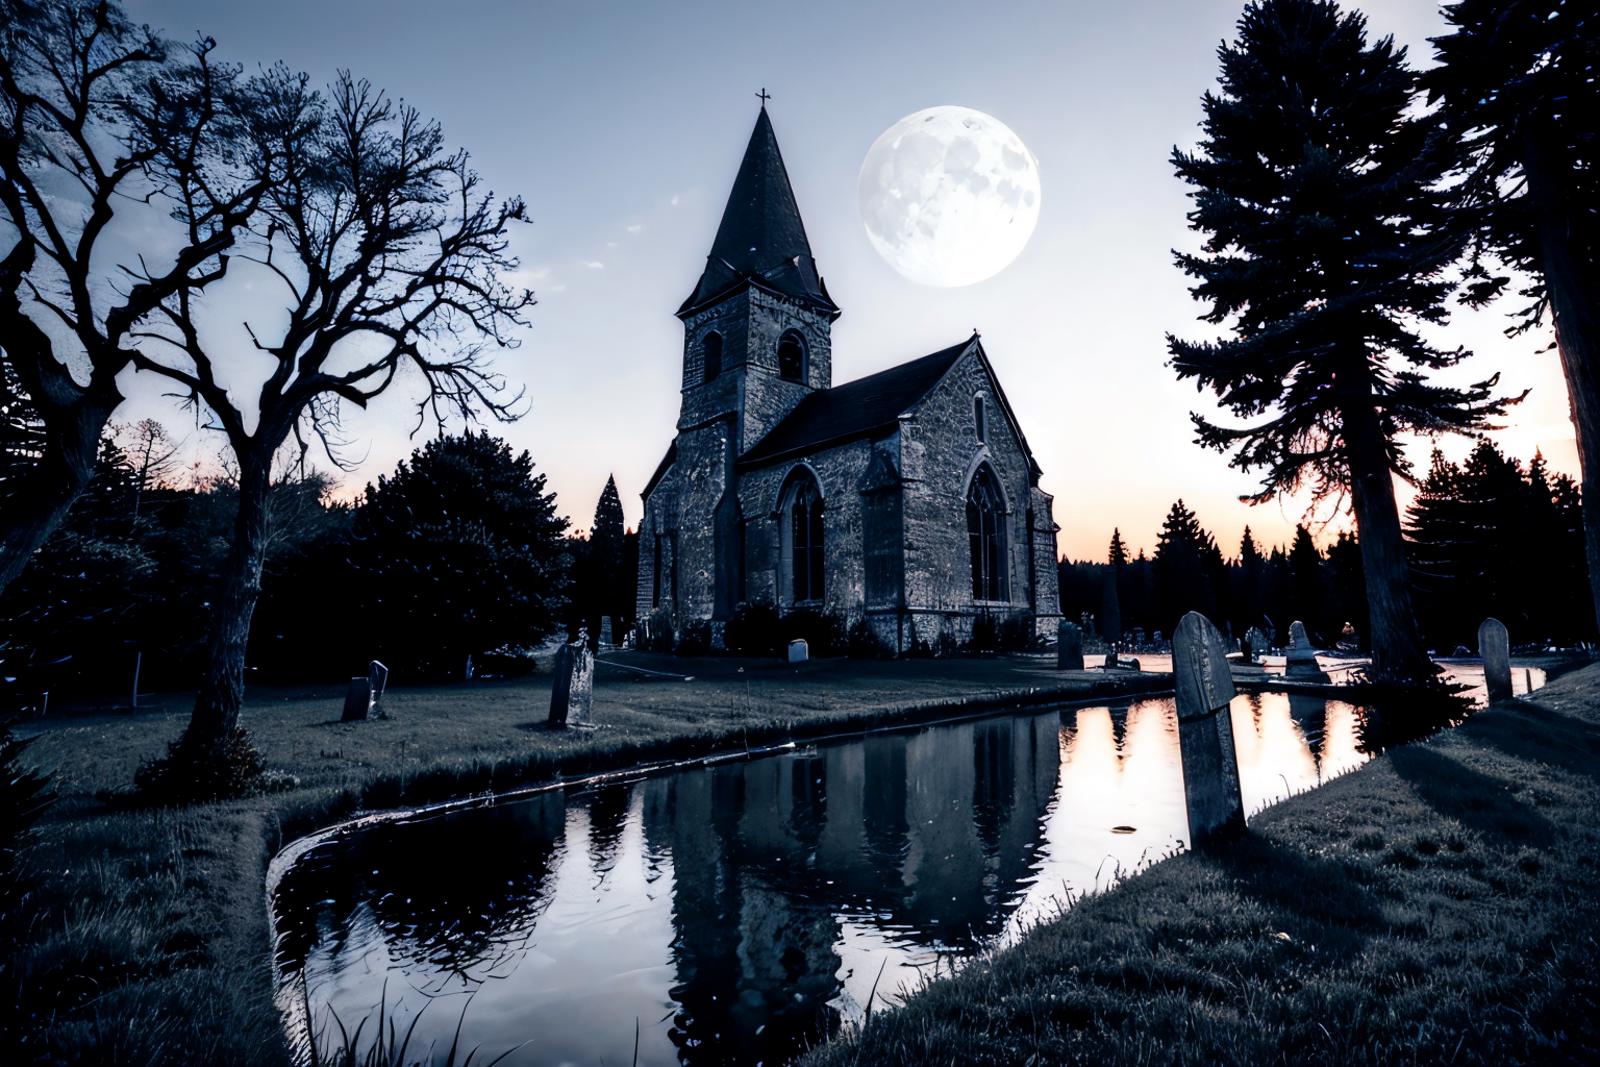 Edob Church Cemetery Creepy Night image by edobgames